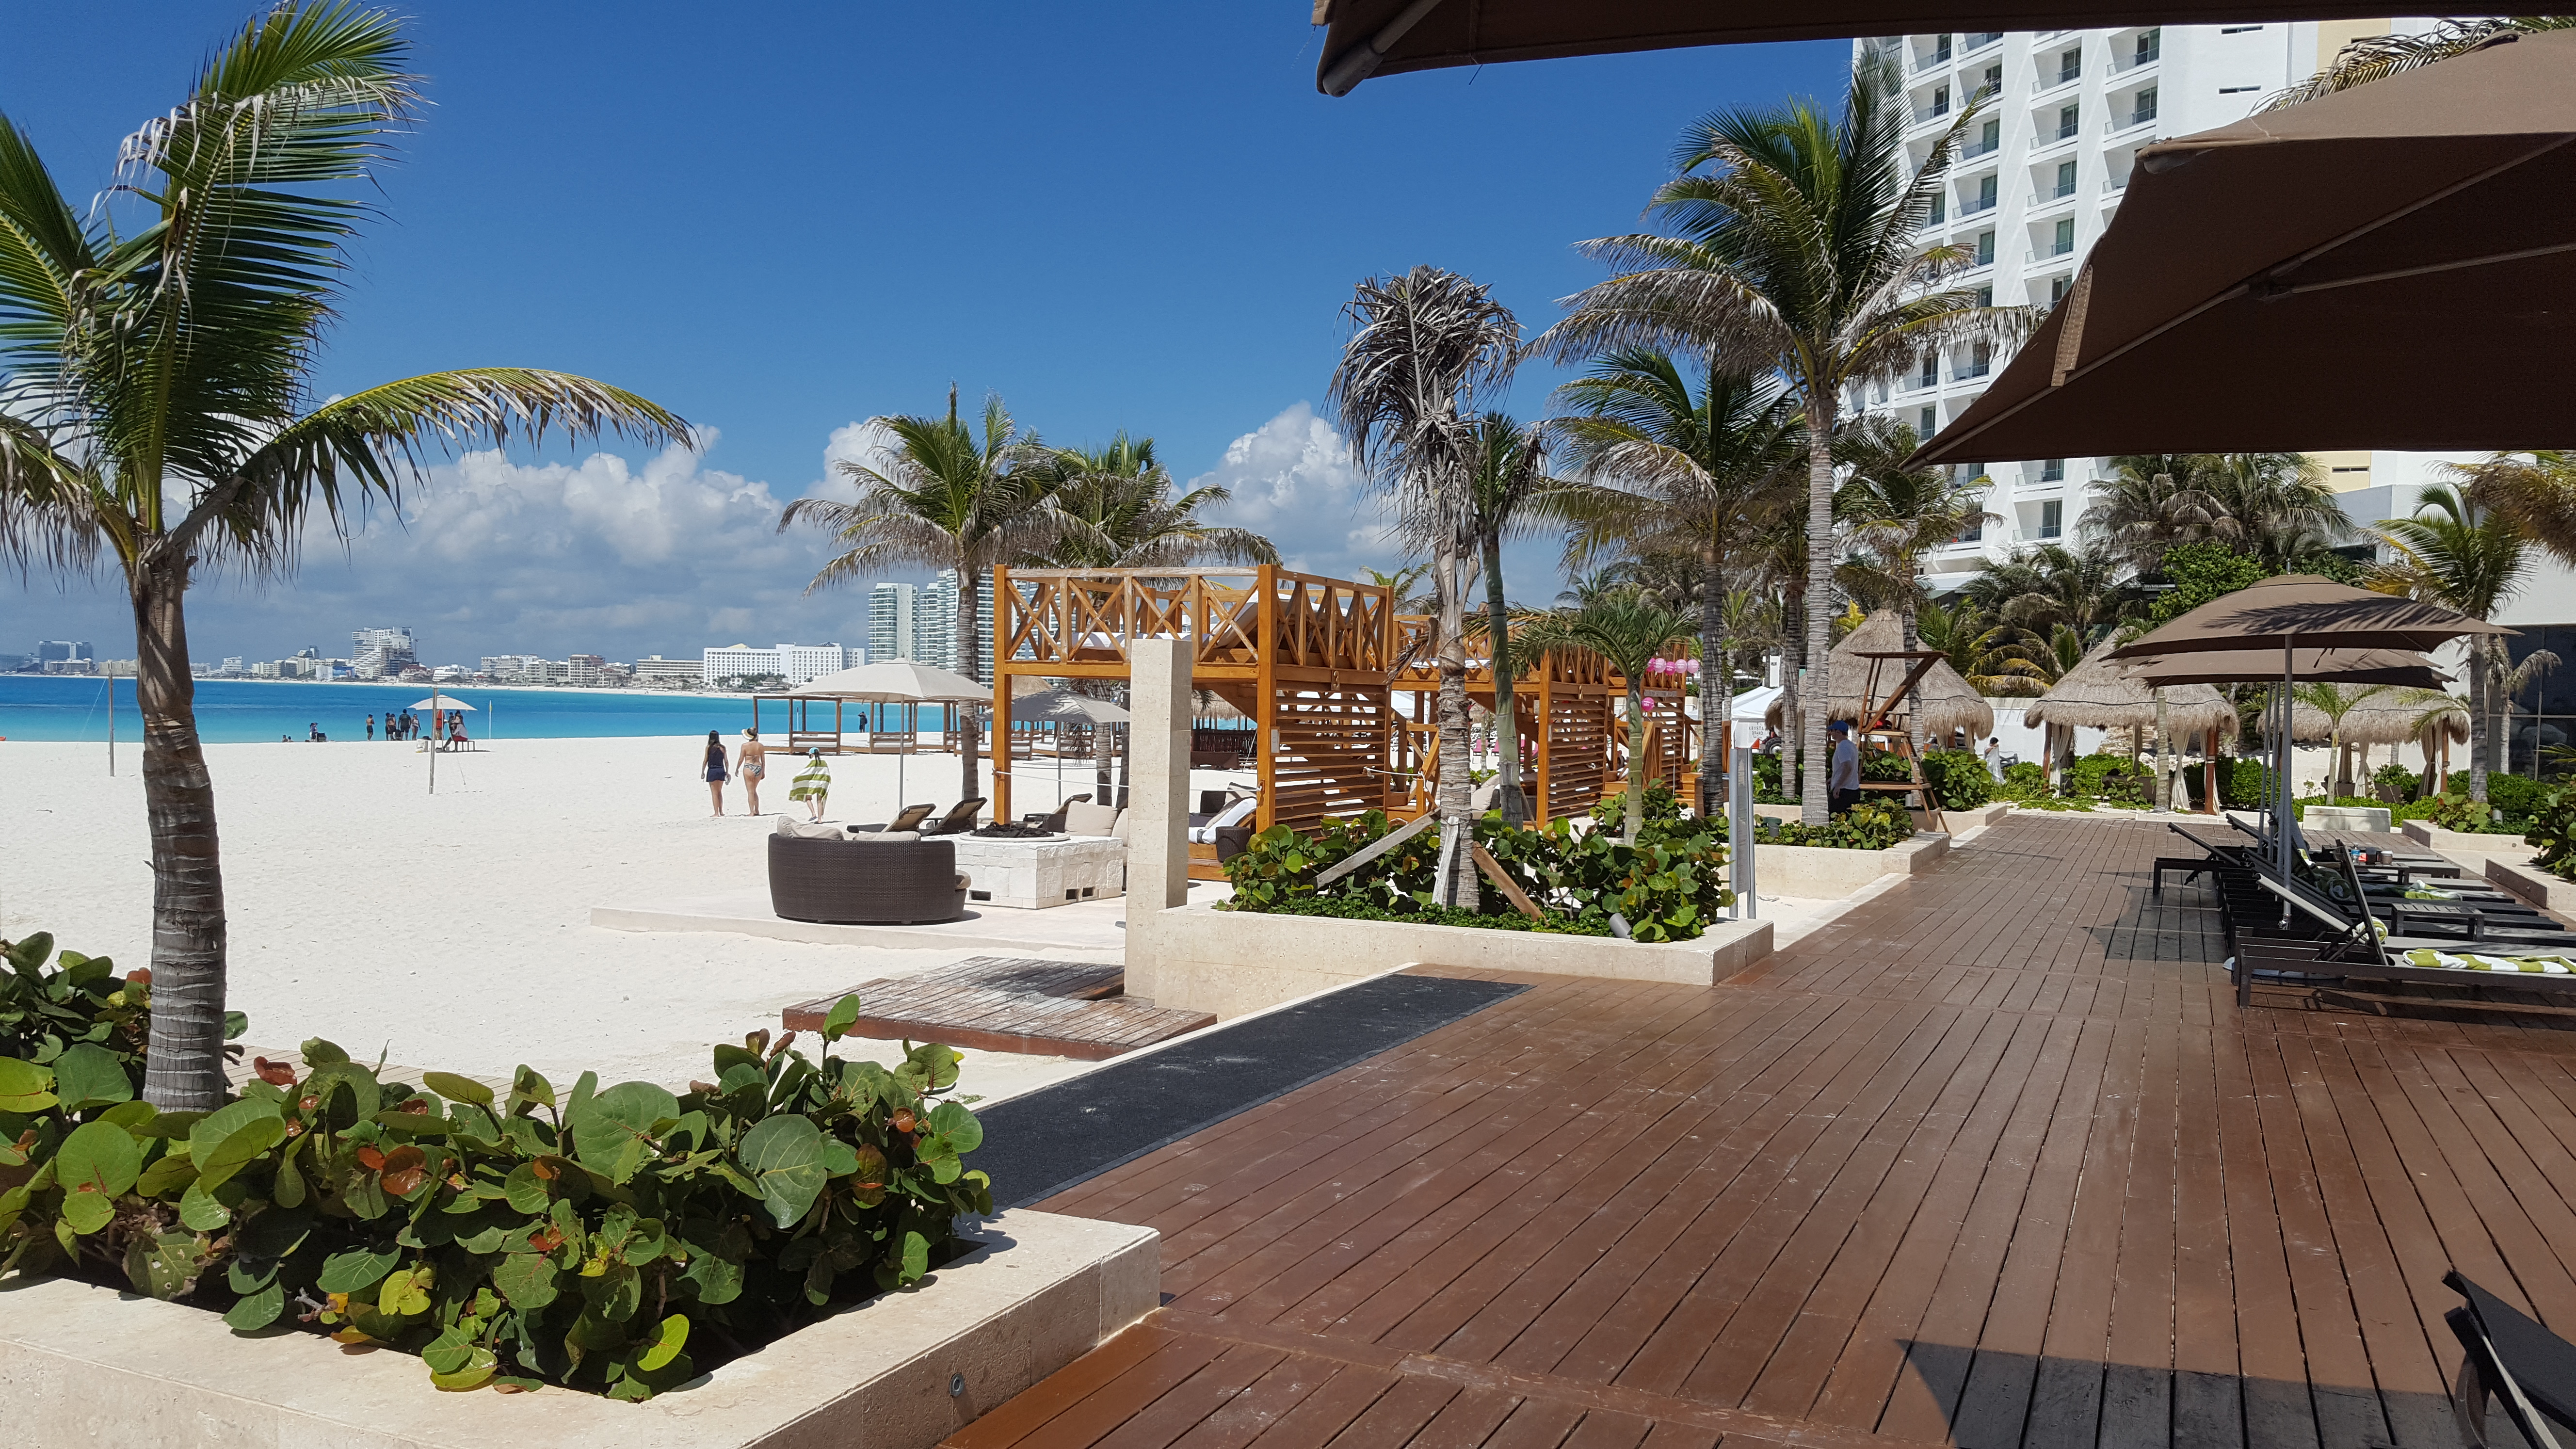 Hyatt Ziva Cancun - REVIEW - MASTER THREAD - Page 15 - FlyerTalk Forums